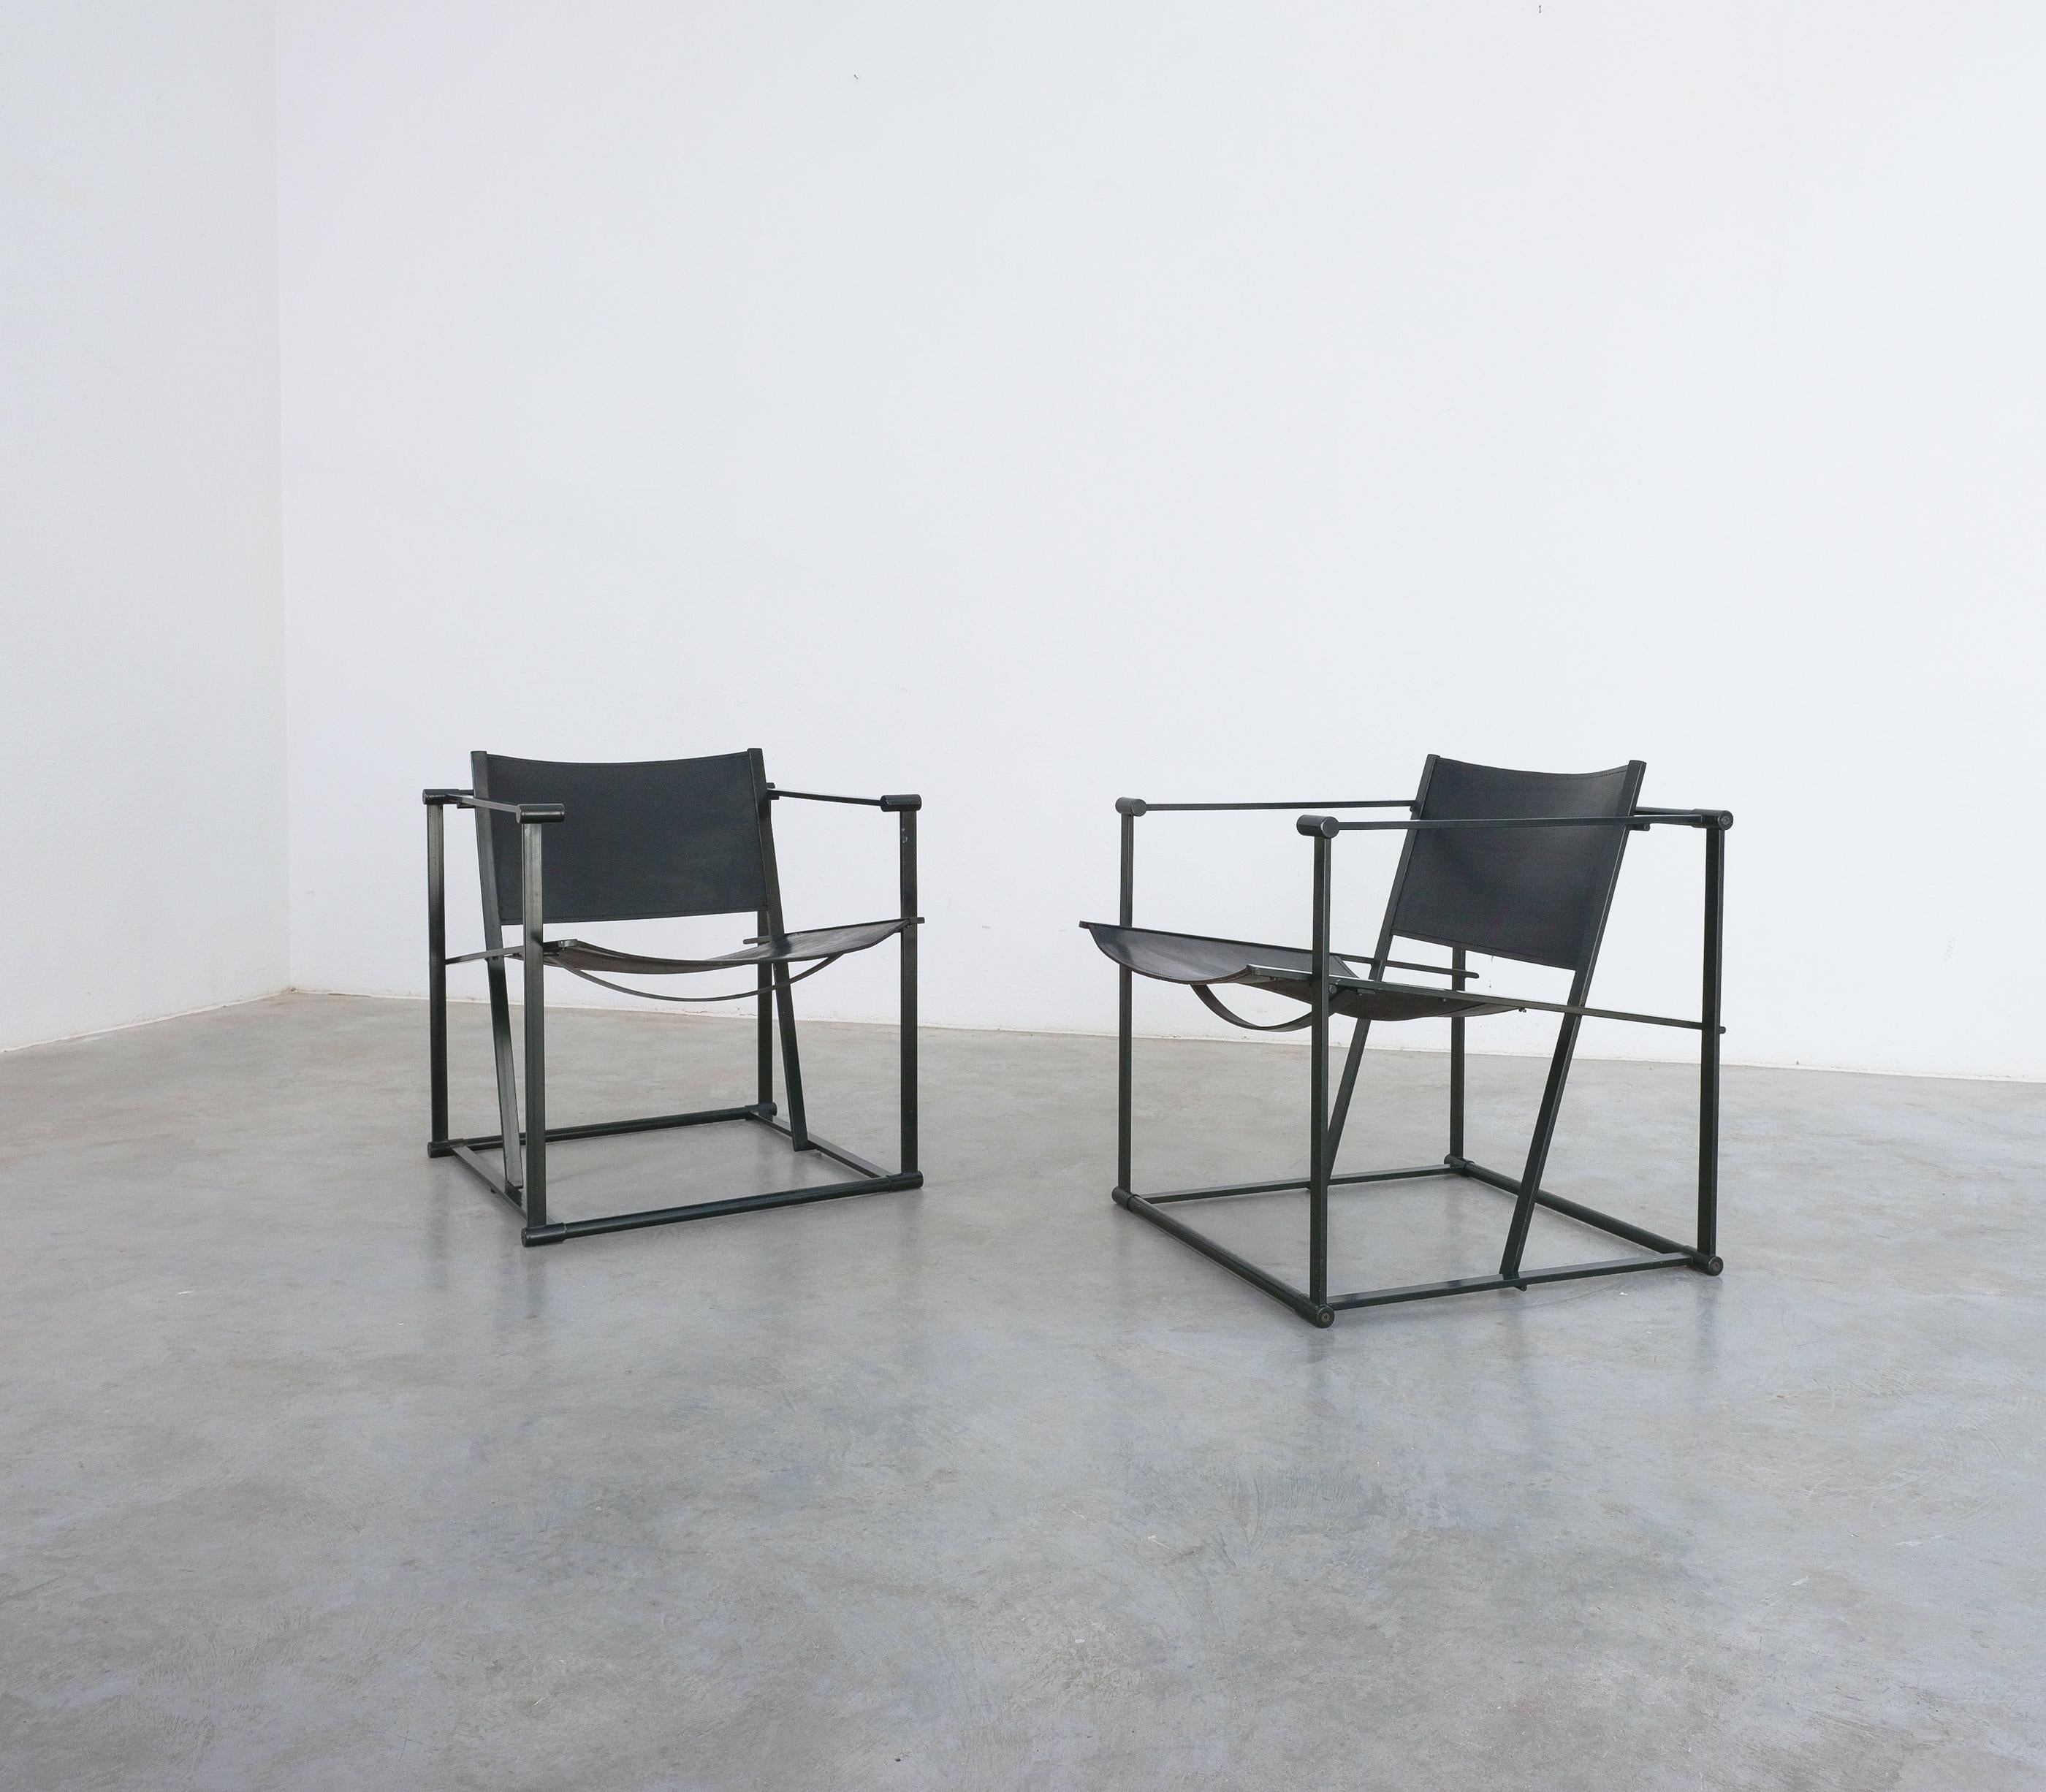 Radboud Van Beekum Lounge Chair Black Leather by for Pastoe Post Modern, 1980 For Sale 6